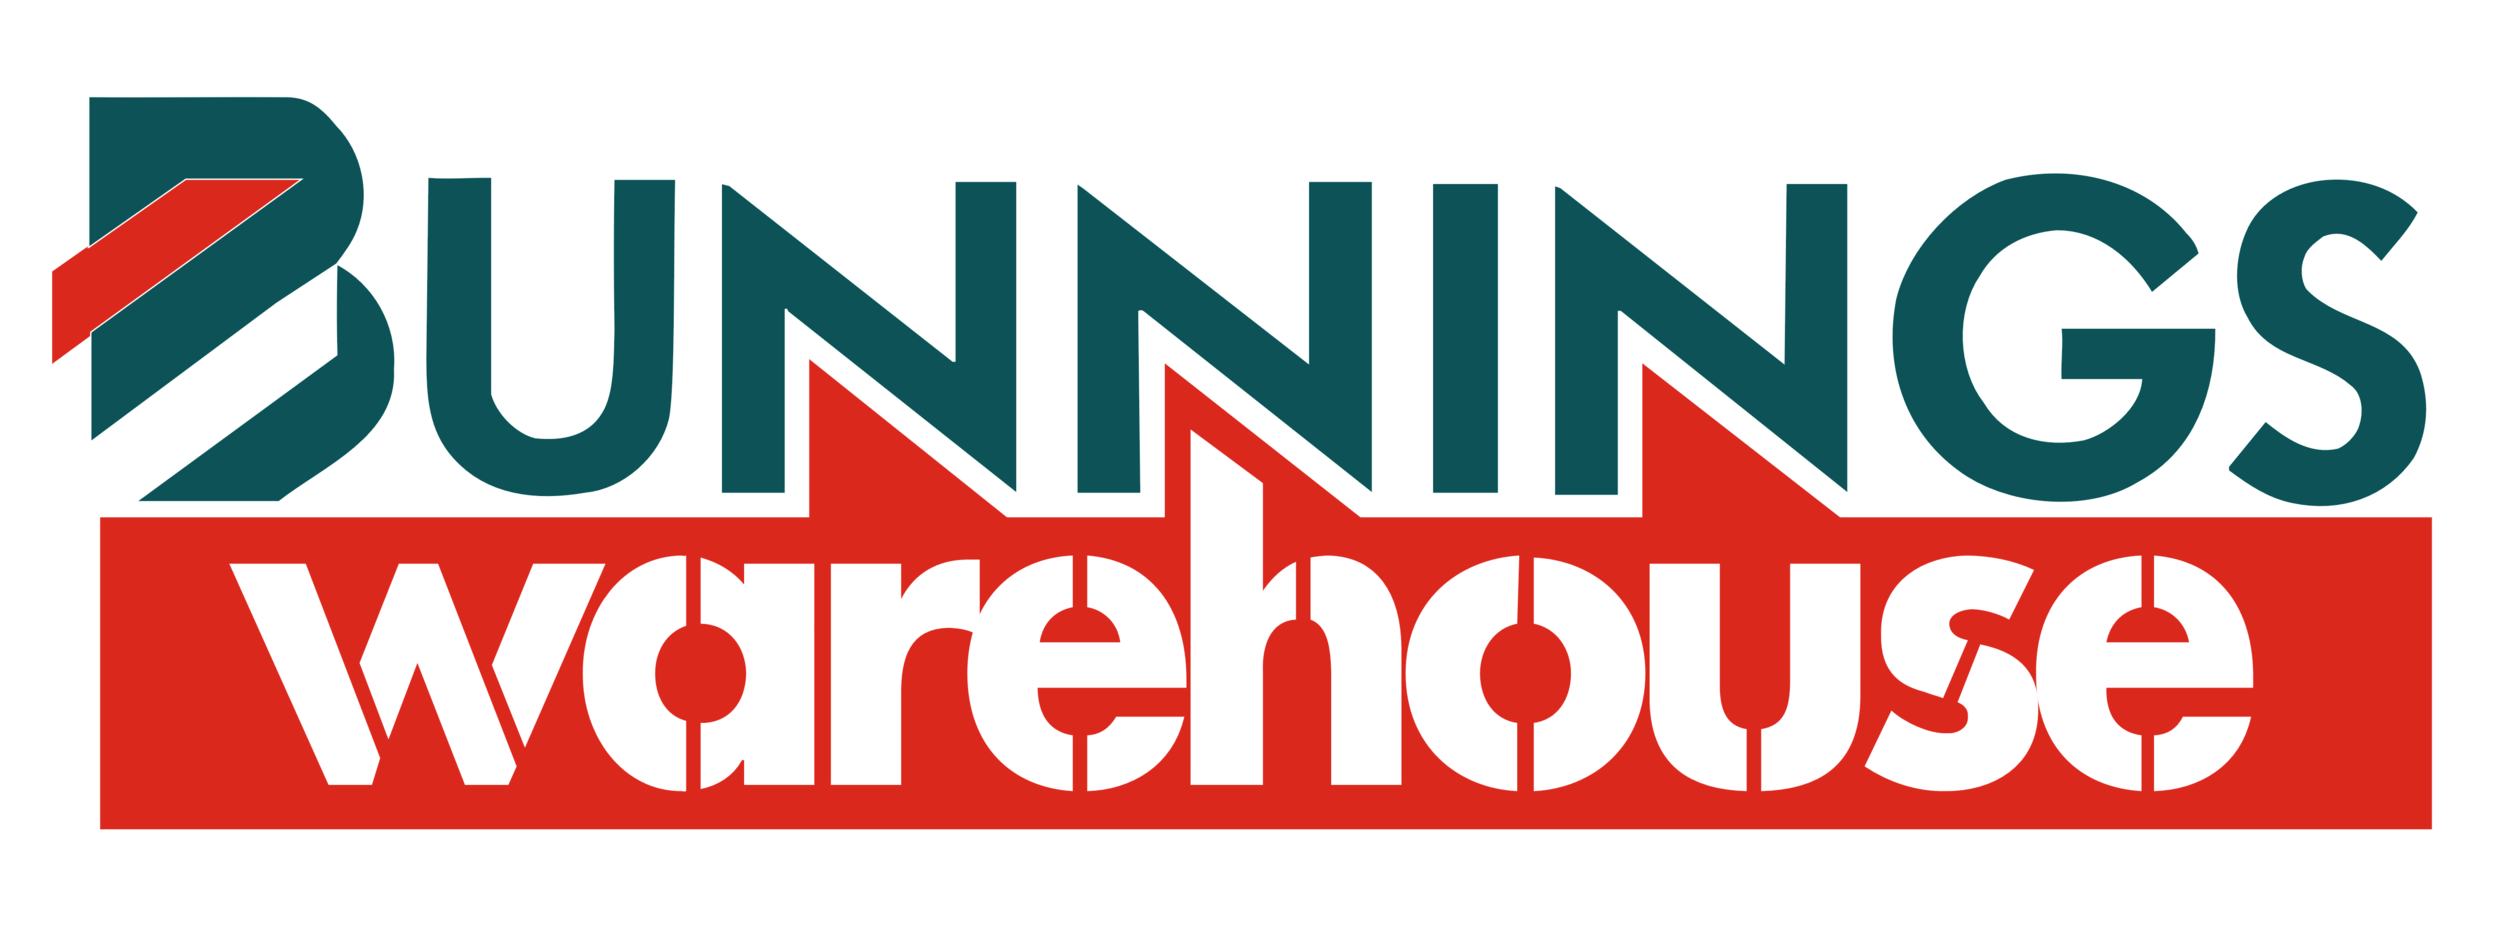 Bunnings_Warehouse_logo.png